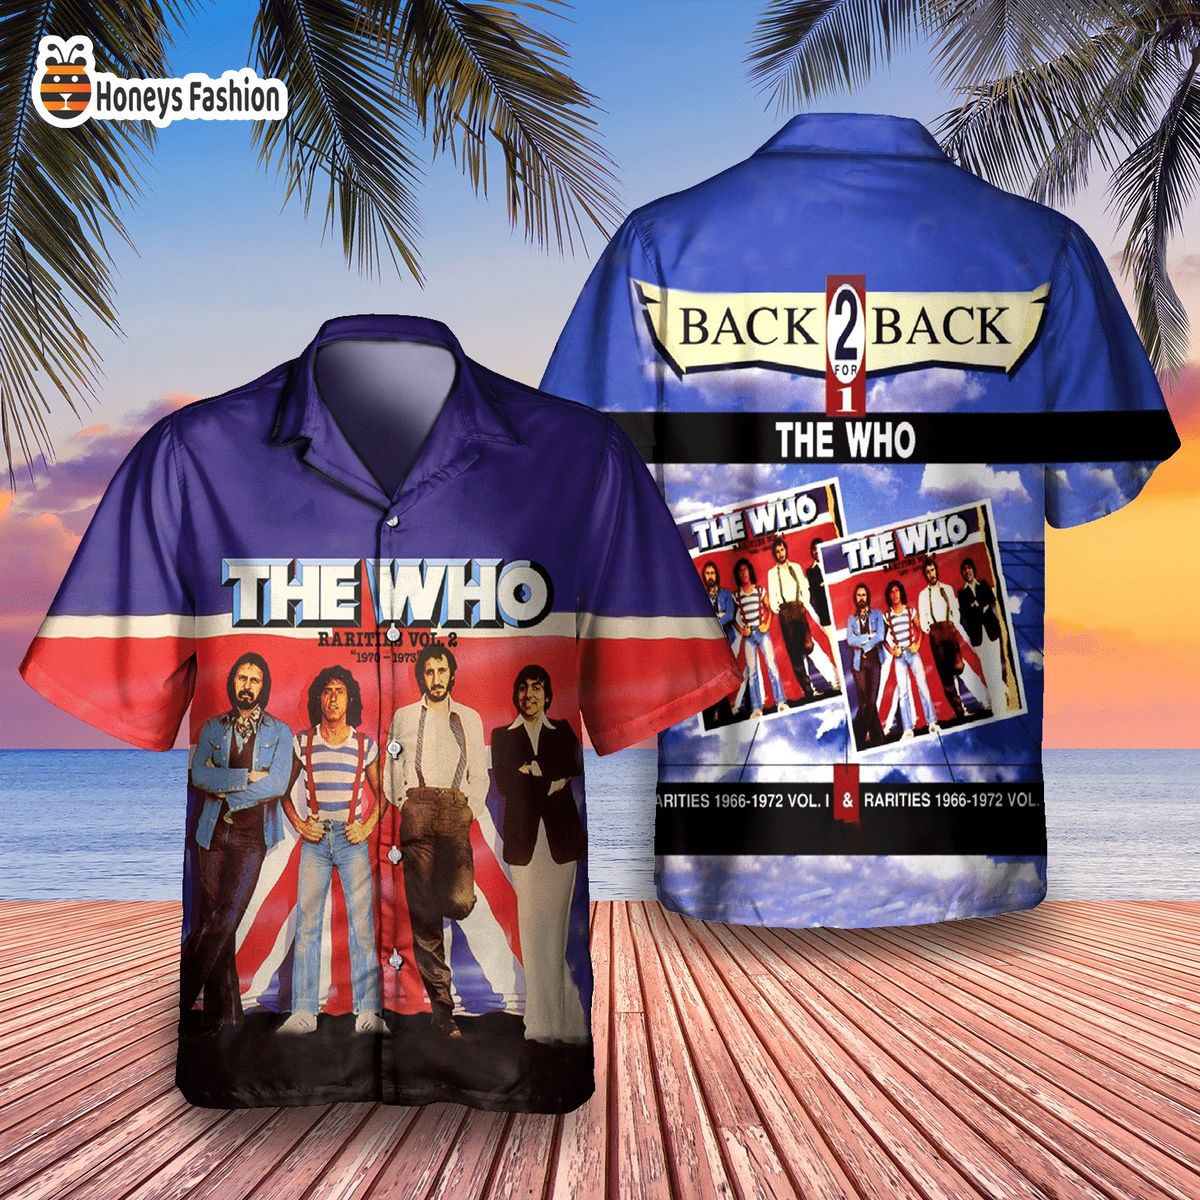 The Who long live rock album cover hawaiian shirt